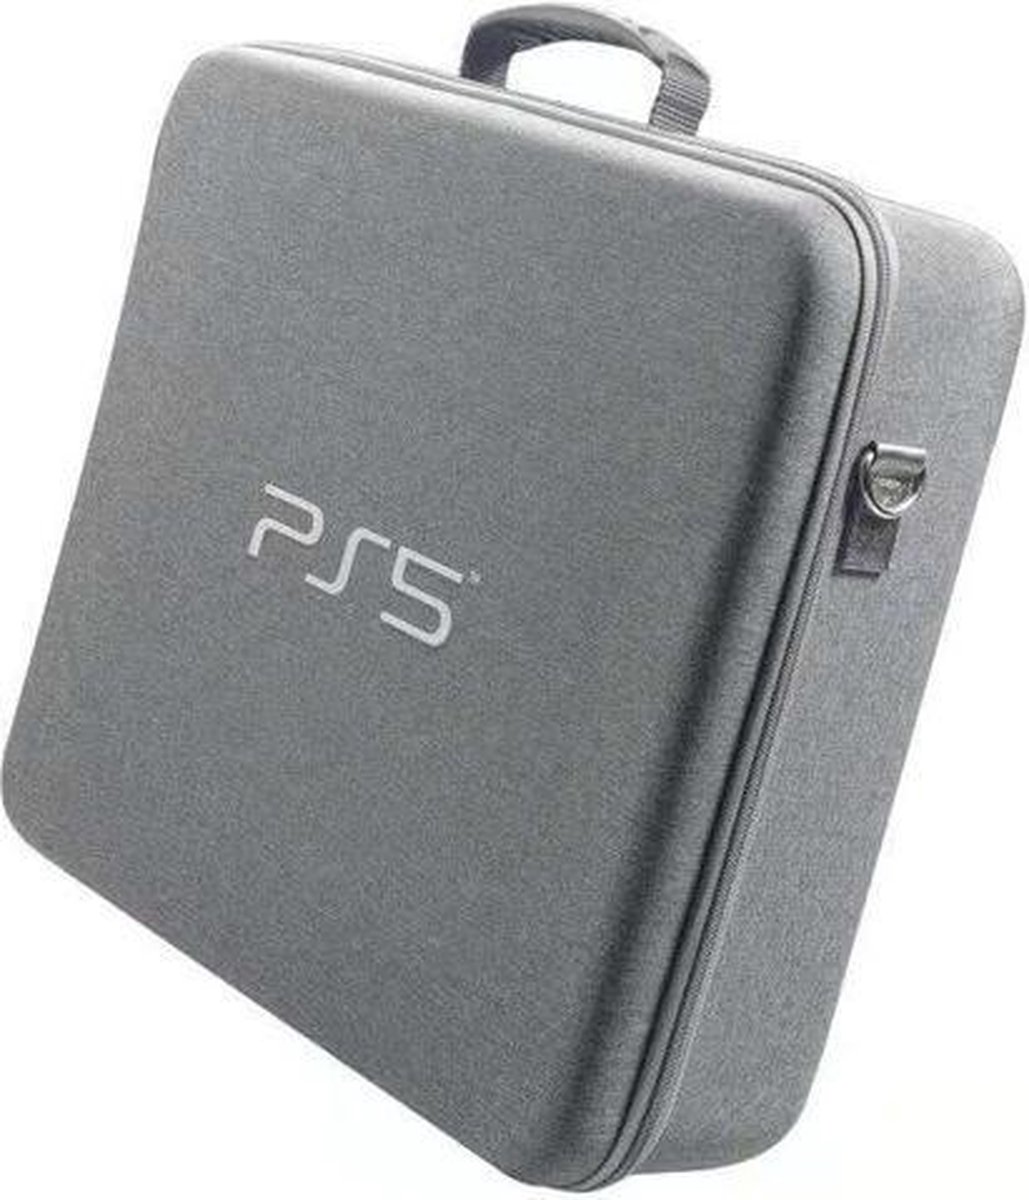 Playstation 5 Carrying Case - Opbergtas - Beschermingscase - Draagtas - PS5 Tas | bol.com